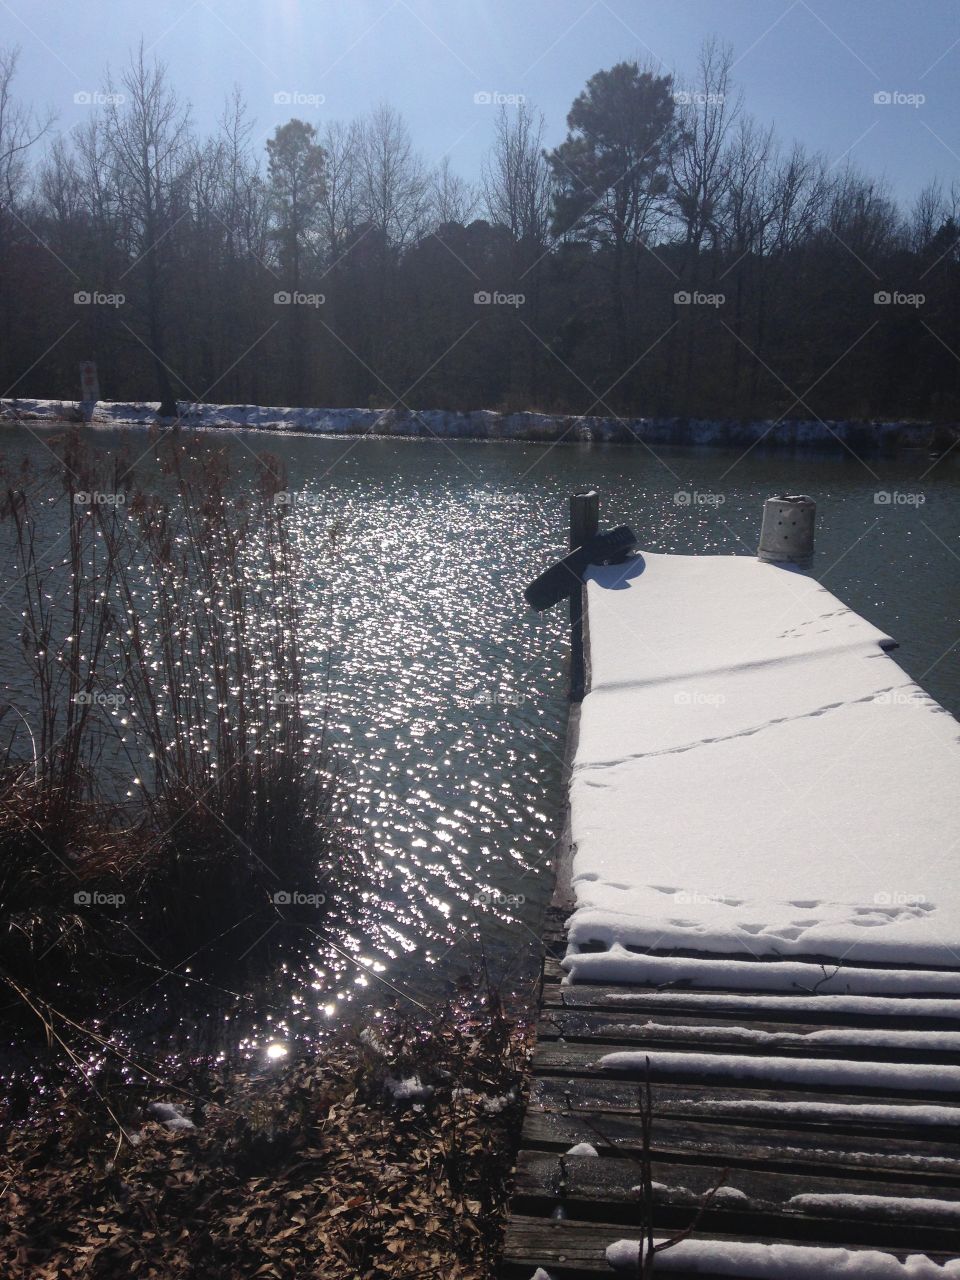 The Snow Dock